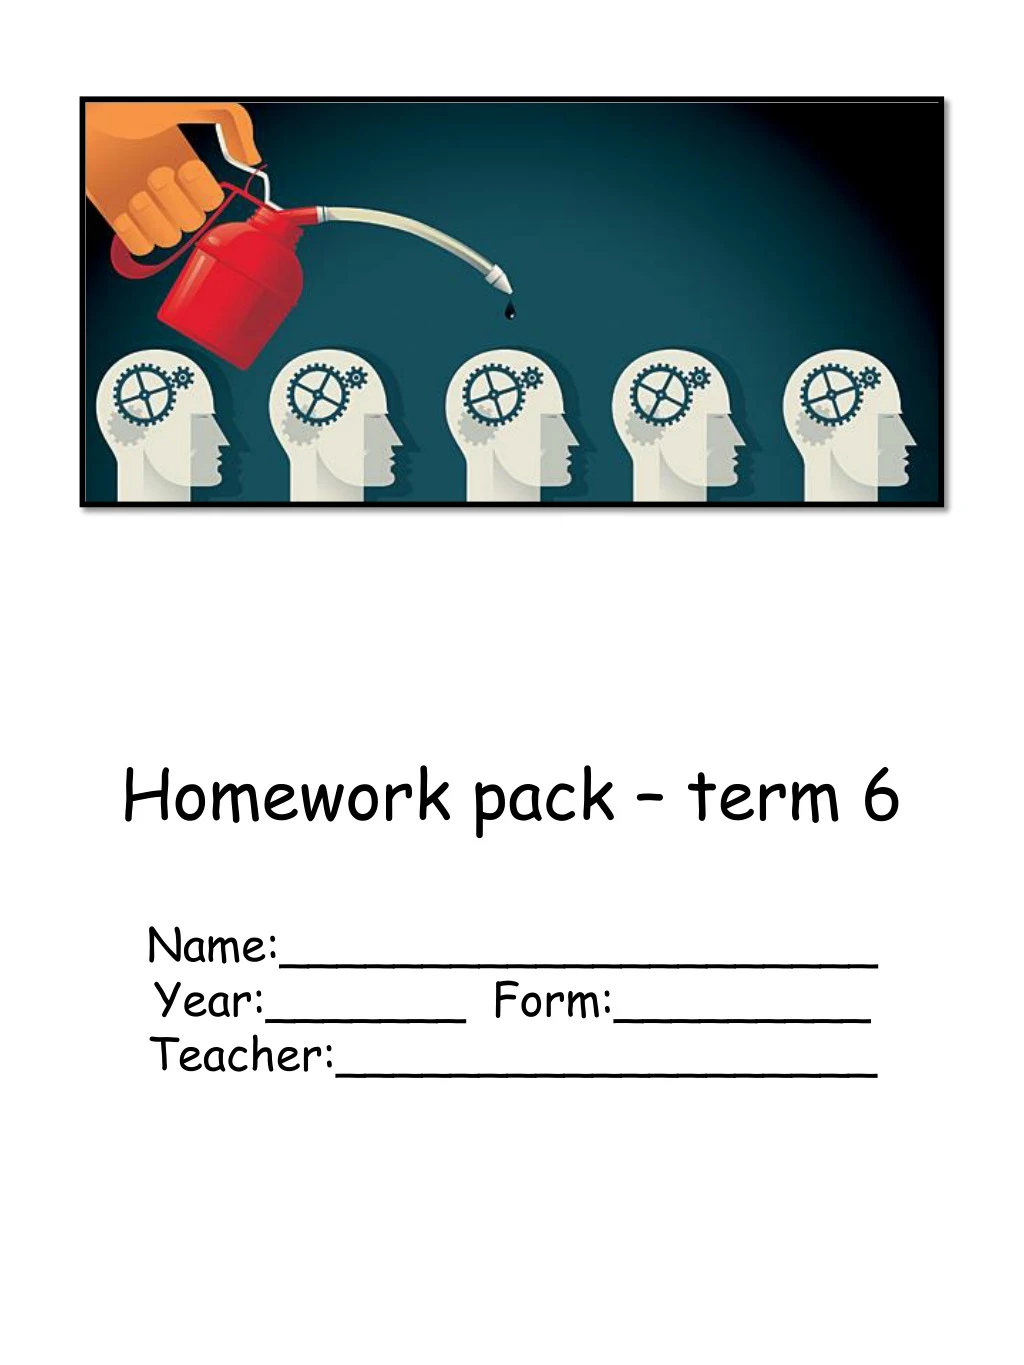 homework pack term 6 name year form teacher